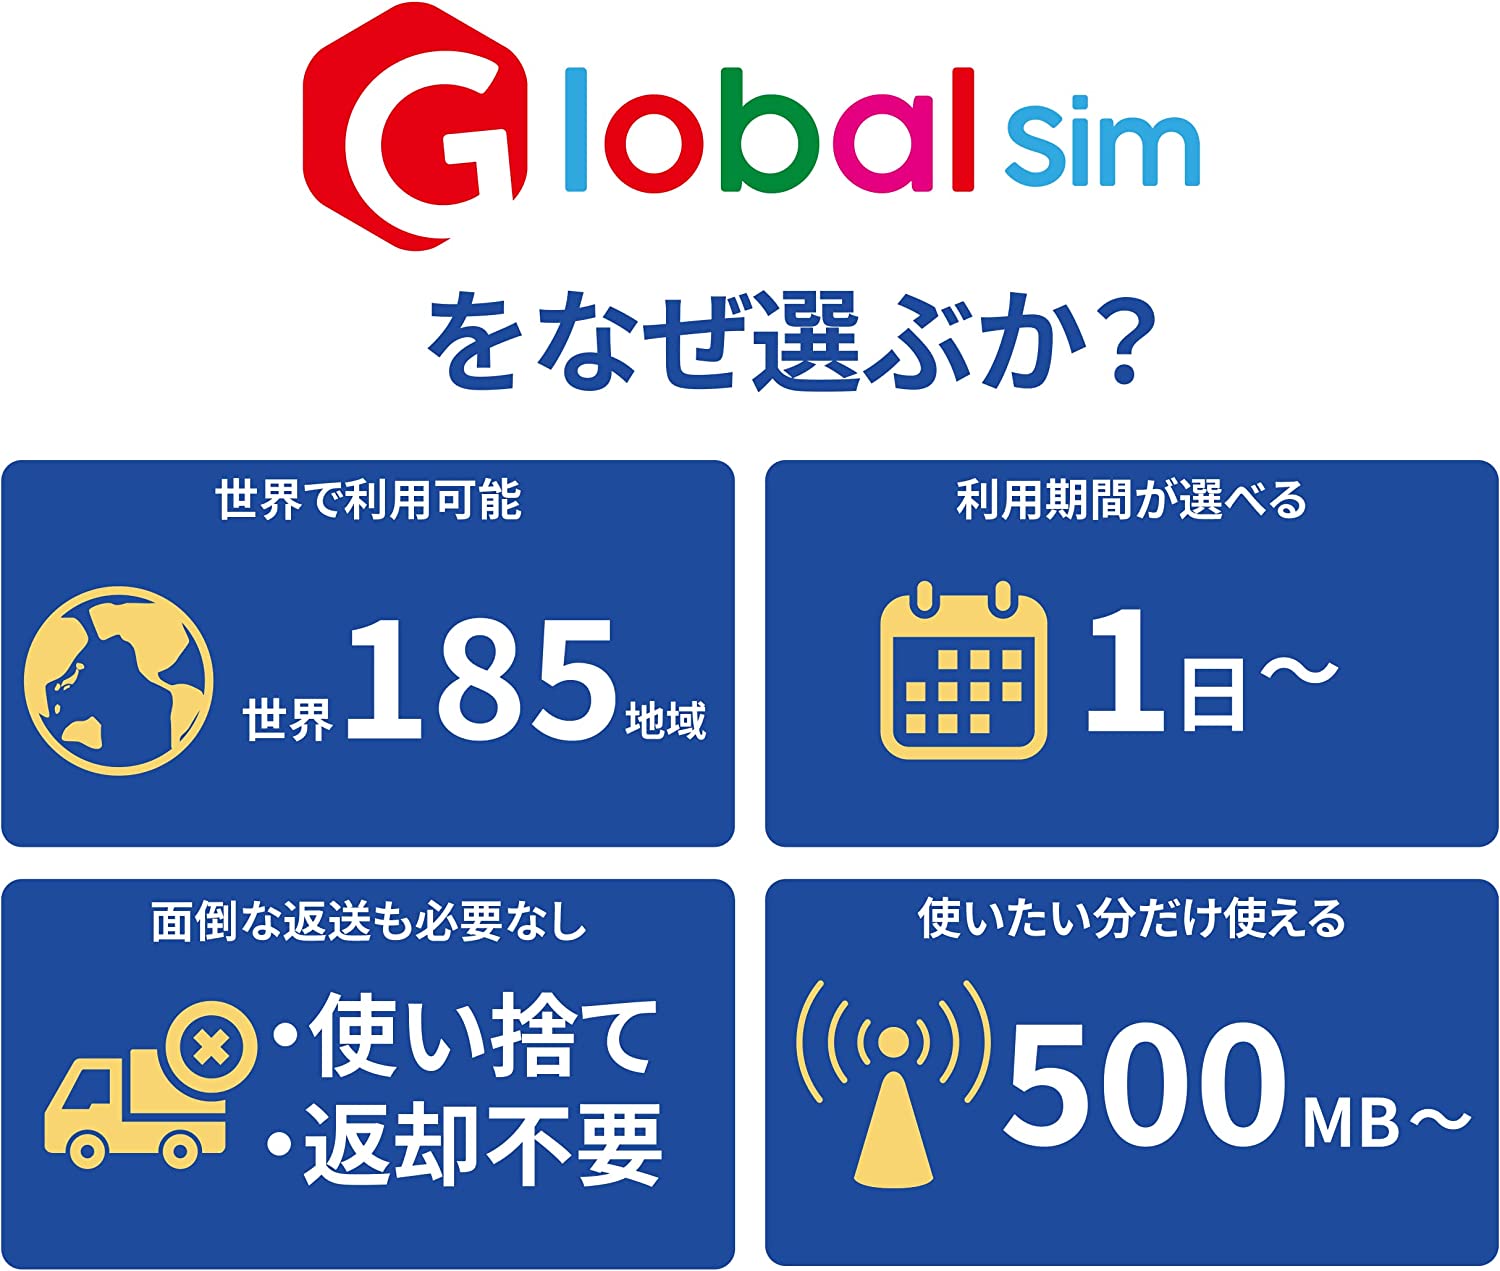 GLOBAL SIM シンガポール マレーシア タイ 7日間 データ無制限 (1GB 日高速）（容量を使い切っても利用期間内は最大384kbps） データ通信専用 シムフリー端末のみ対応 追加費用なし・契約不要